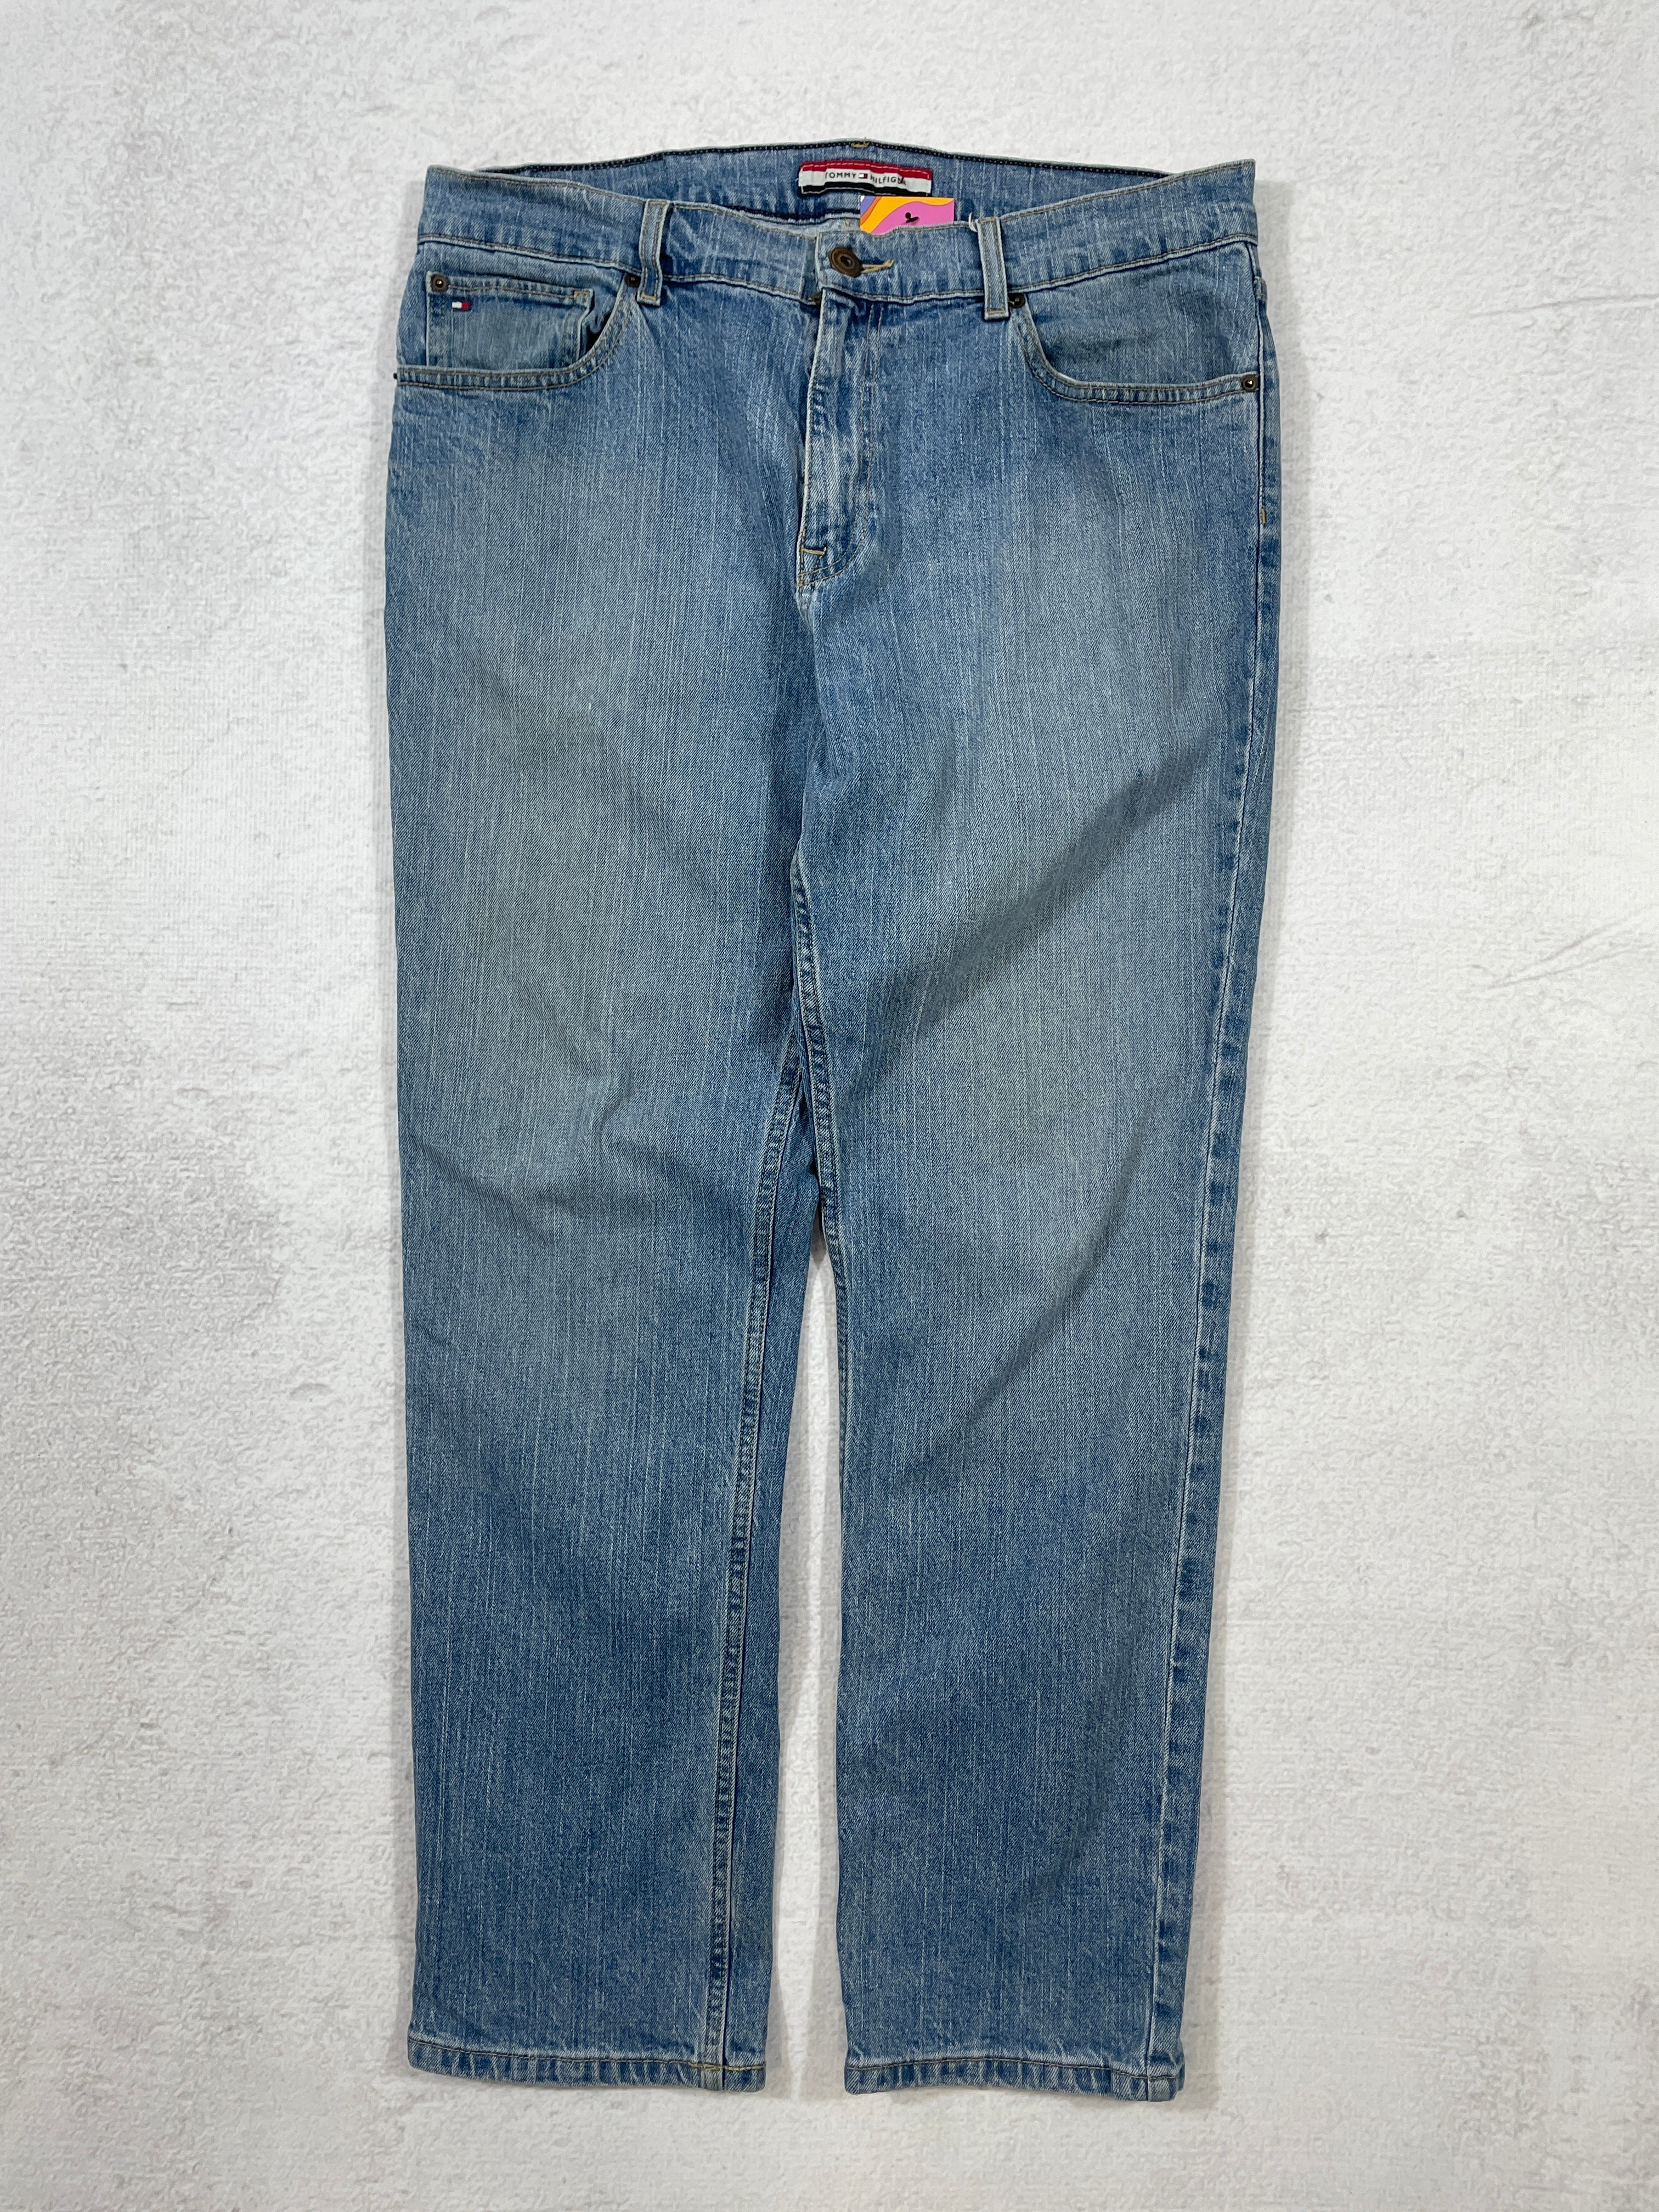 Vintage Tommy Hilfiger Jeans - Men's 36Wx30L